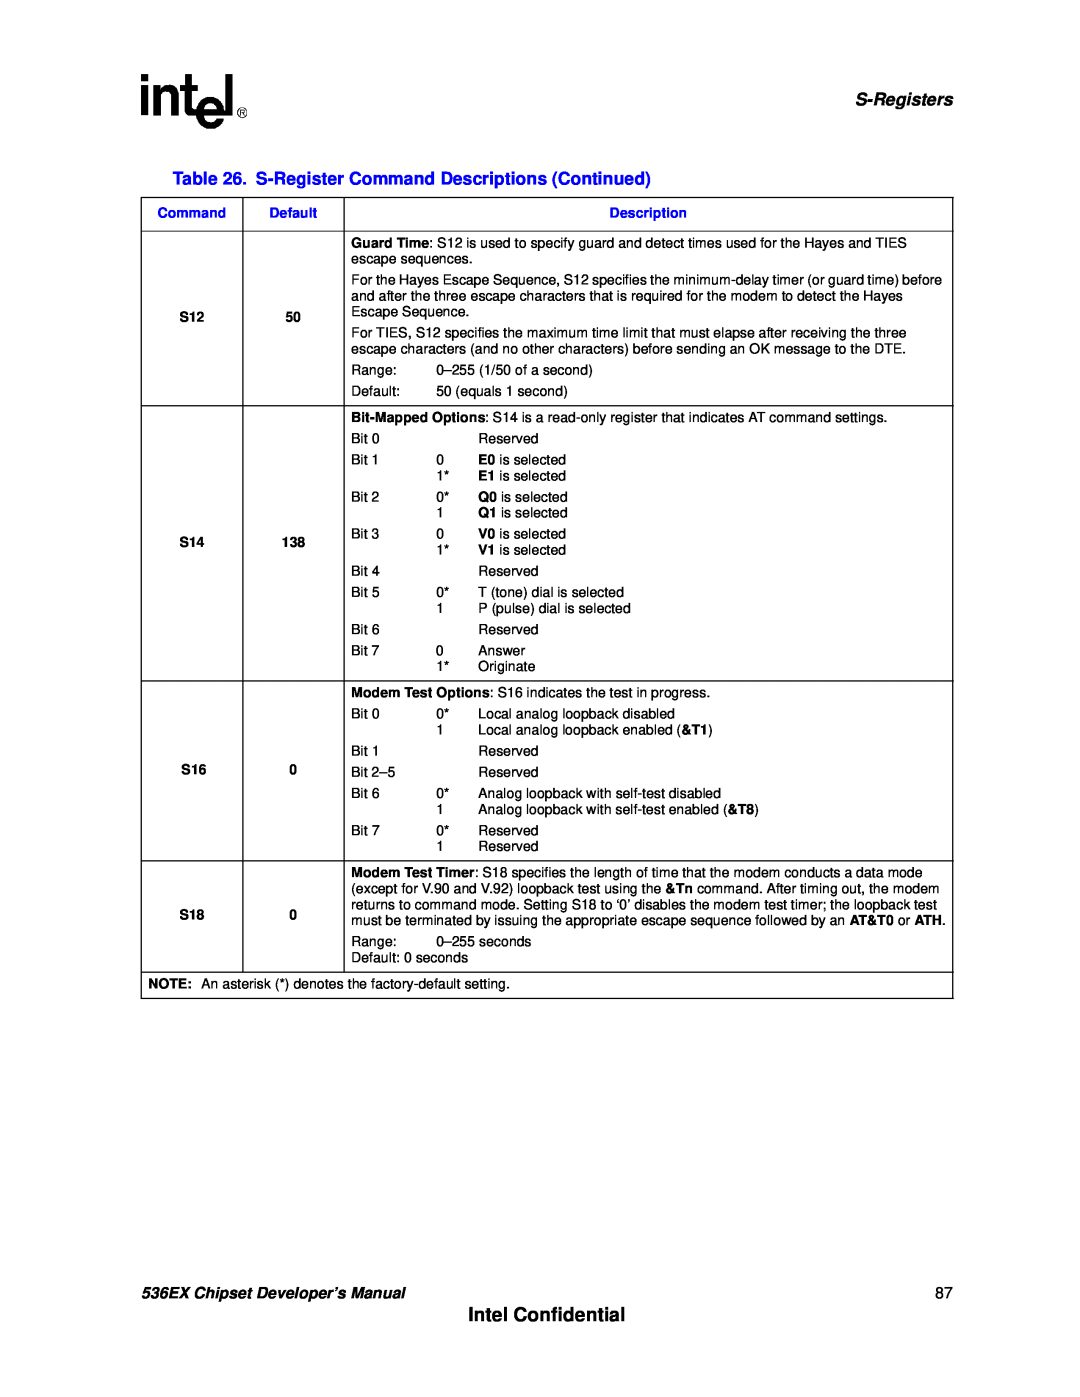 Intel 537EX manual Intel Confidential, S-Registers, 536EX Chipset Developer’s Manual 